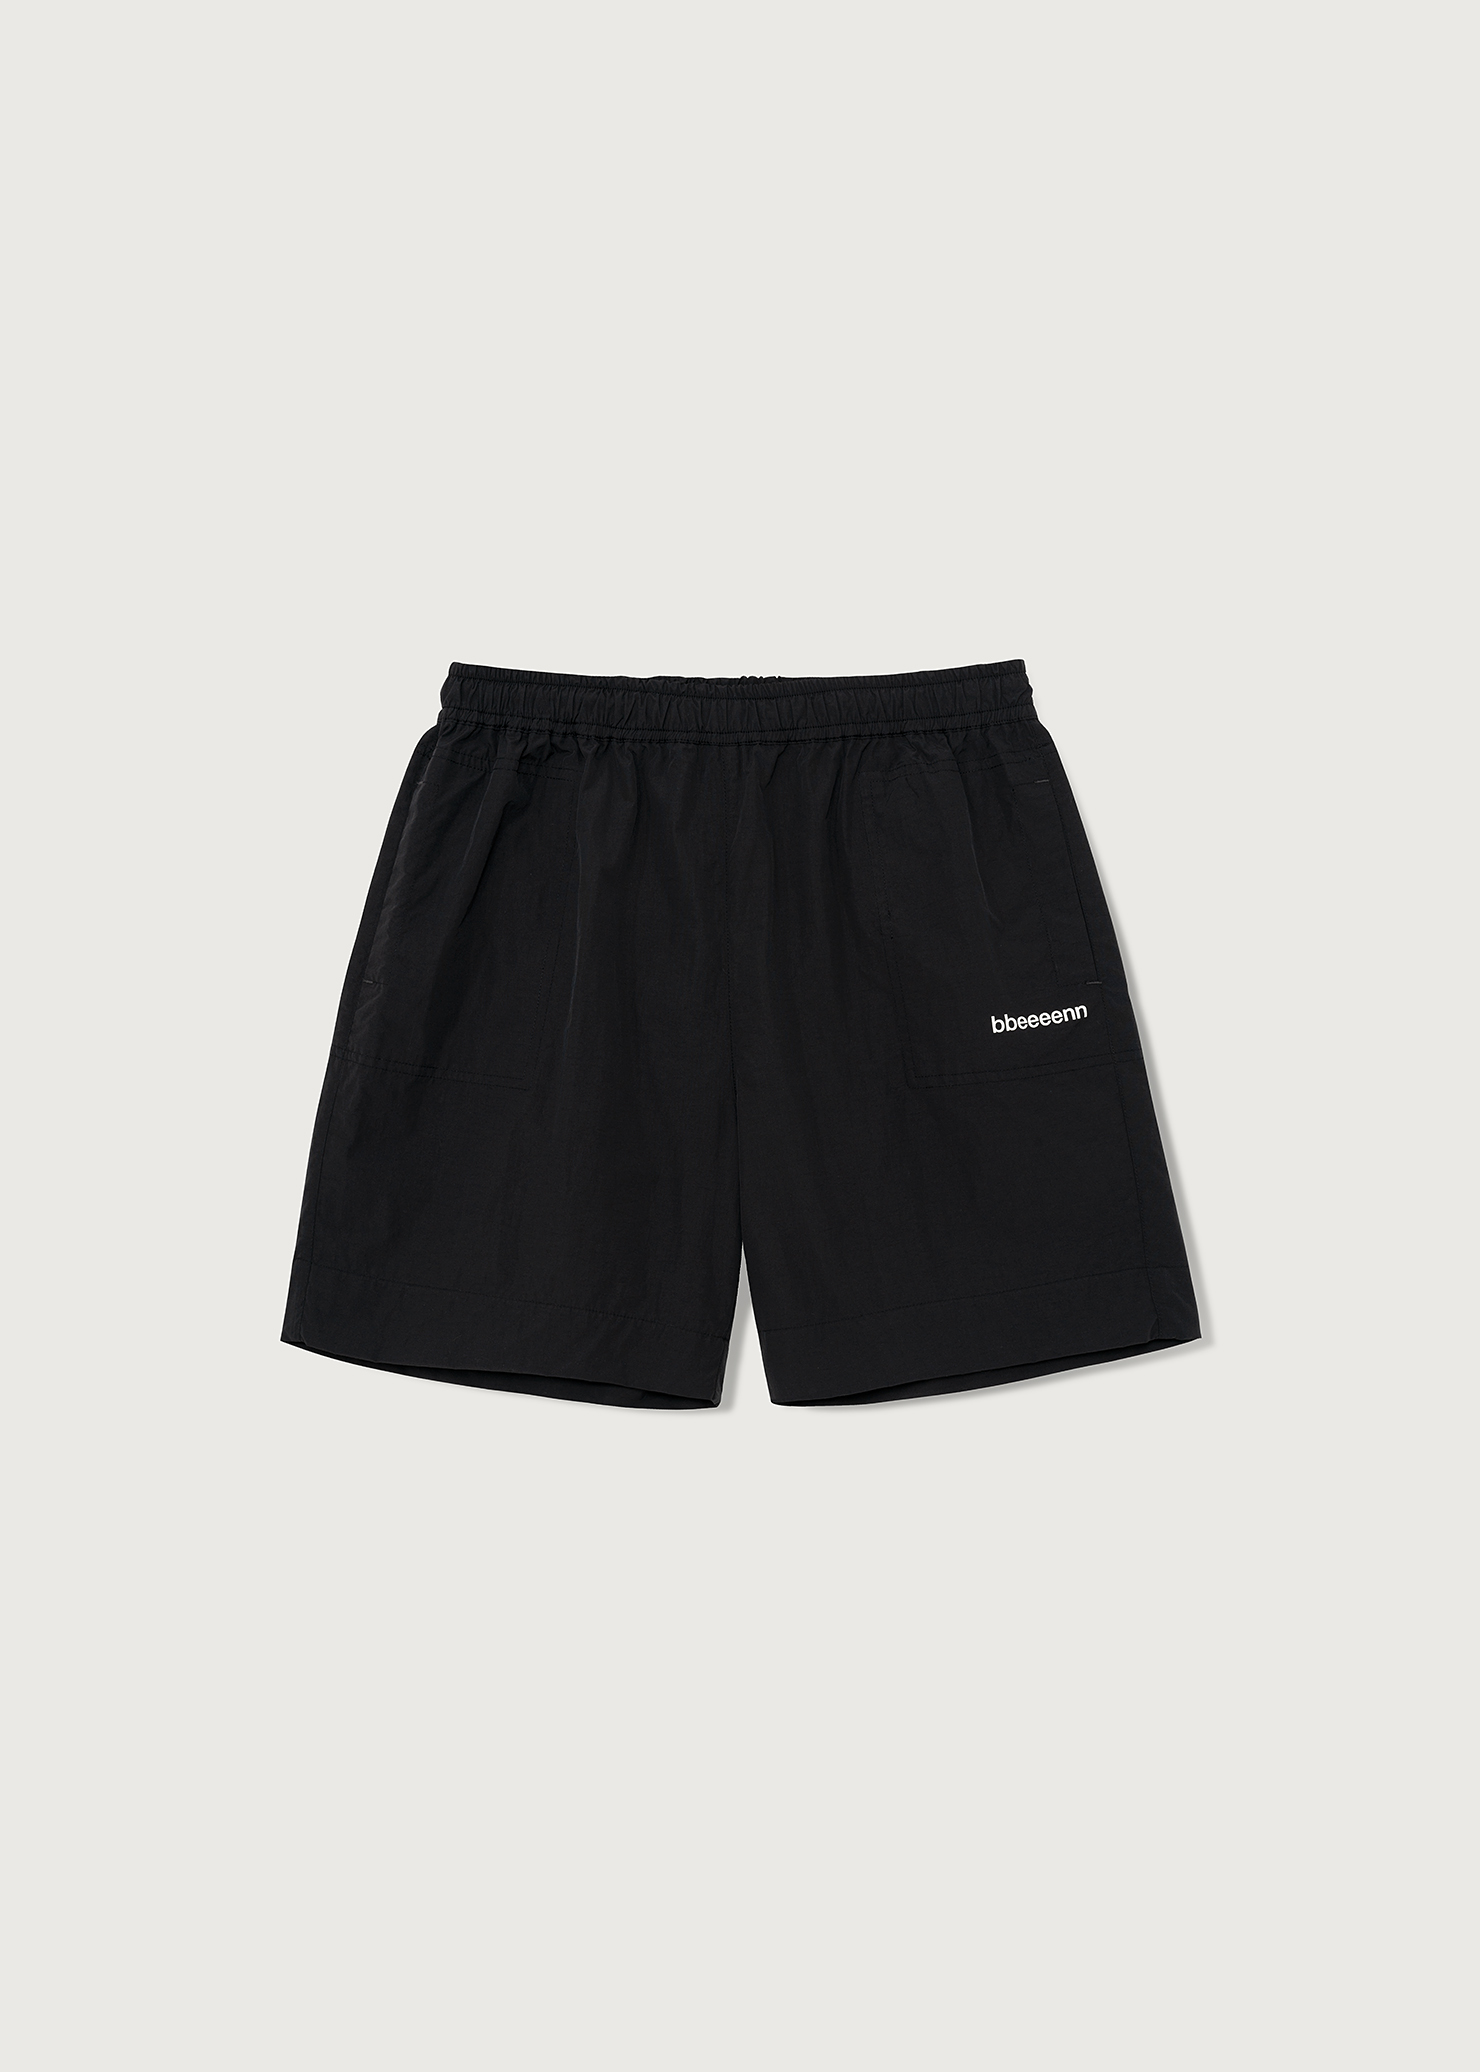 Technical Fabric Shorts_Black